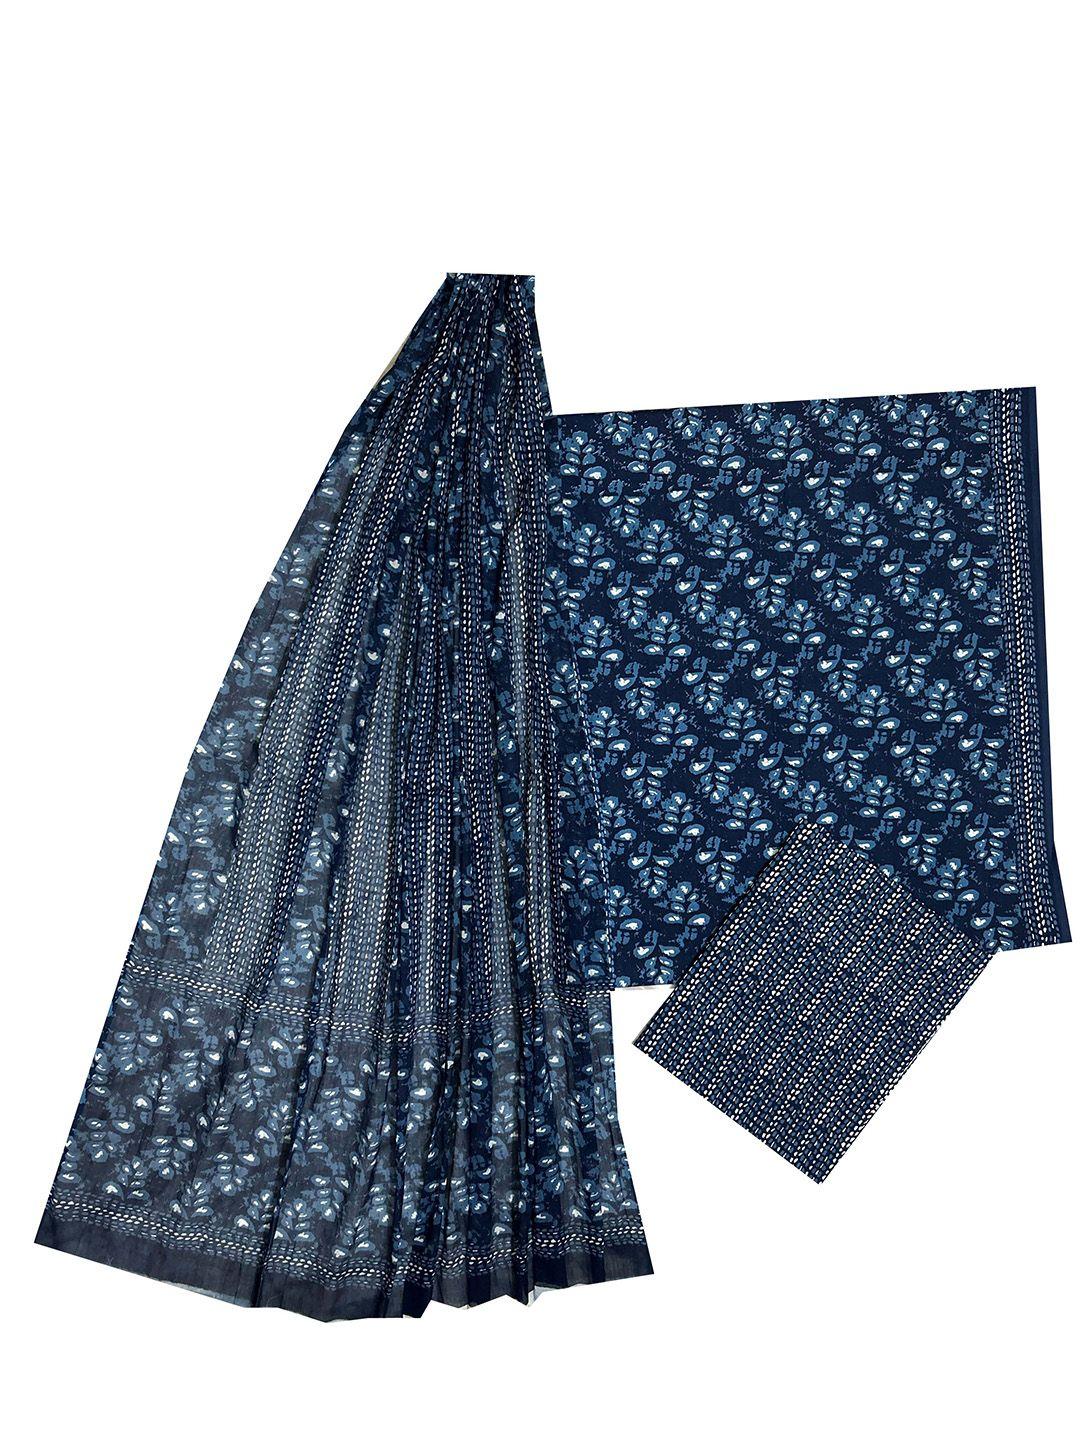 gk fashion ethnic motifs printed pure cotton block print unstitched dress material